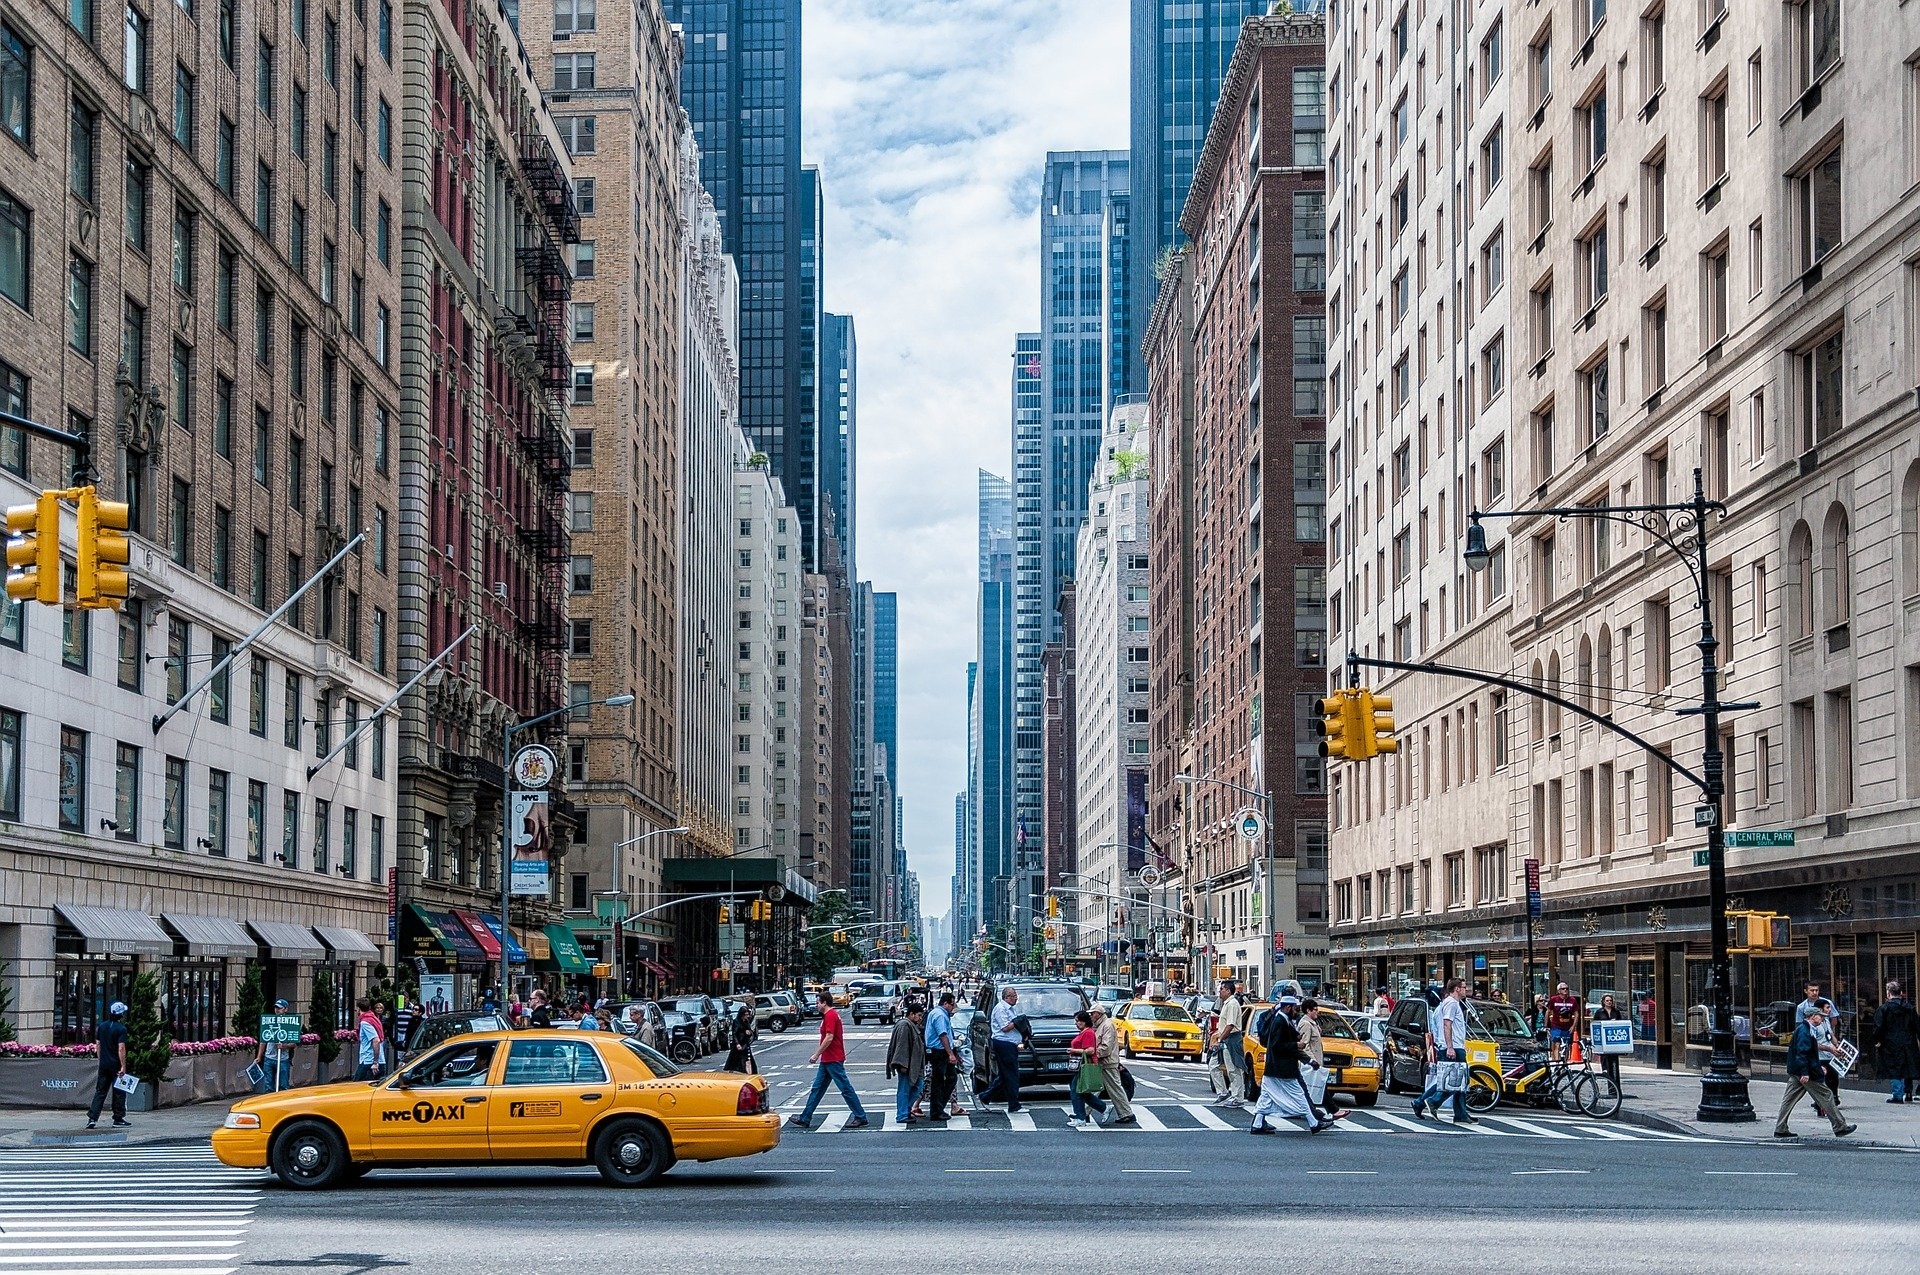 Pedestrians In The New York City